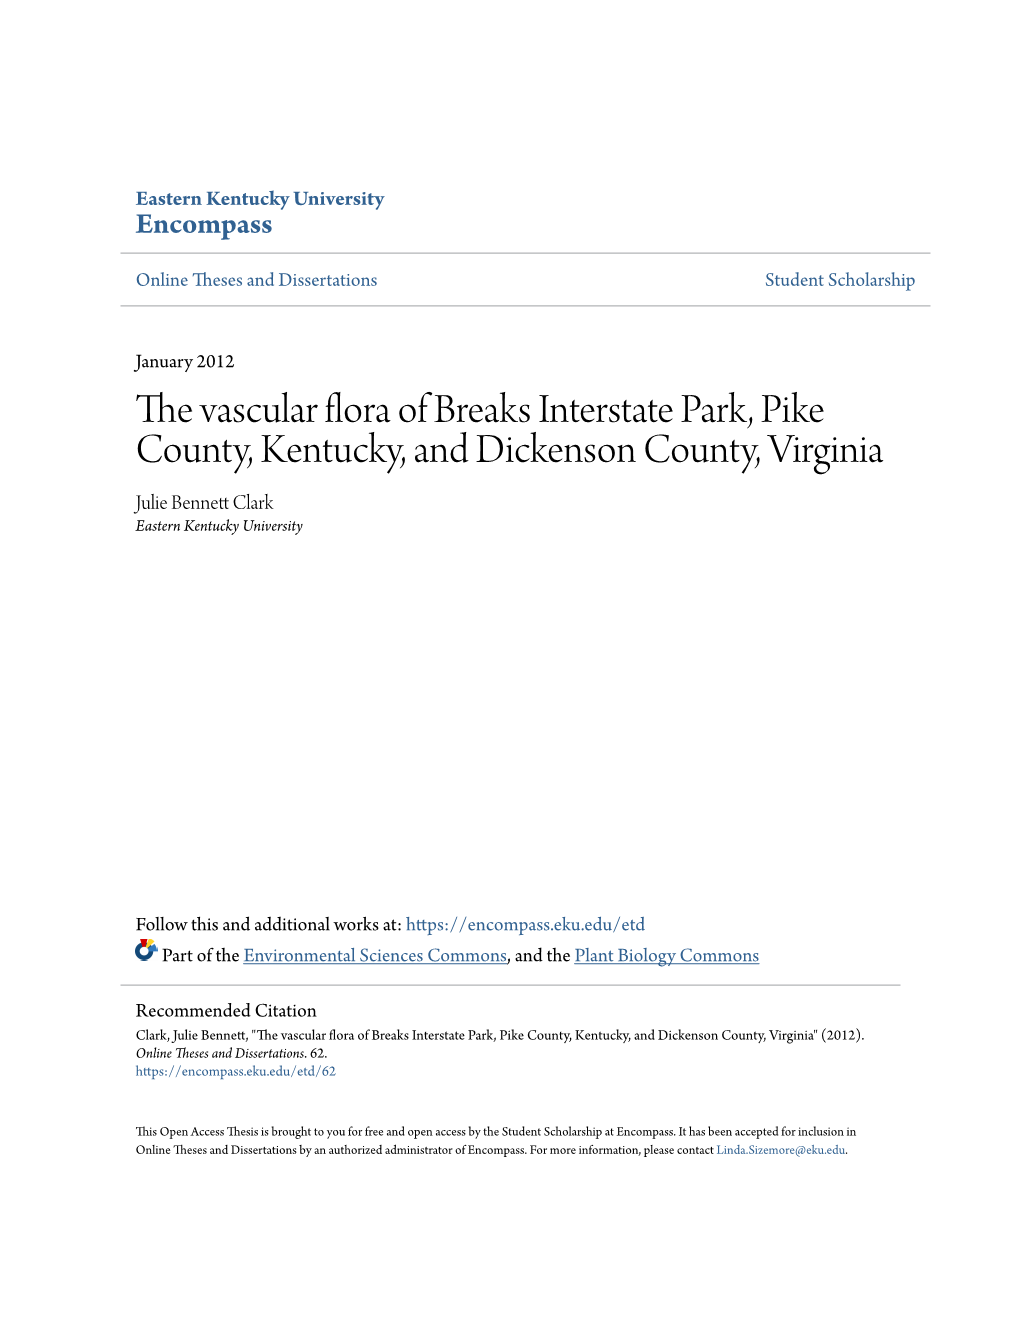 The Vascular Flora of Breaks Interstate Park, Pike County, Kentucky, and Dickenson County, Virginia Julie Bennett Lc Ark Eastern Kentucky University